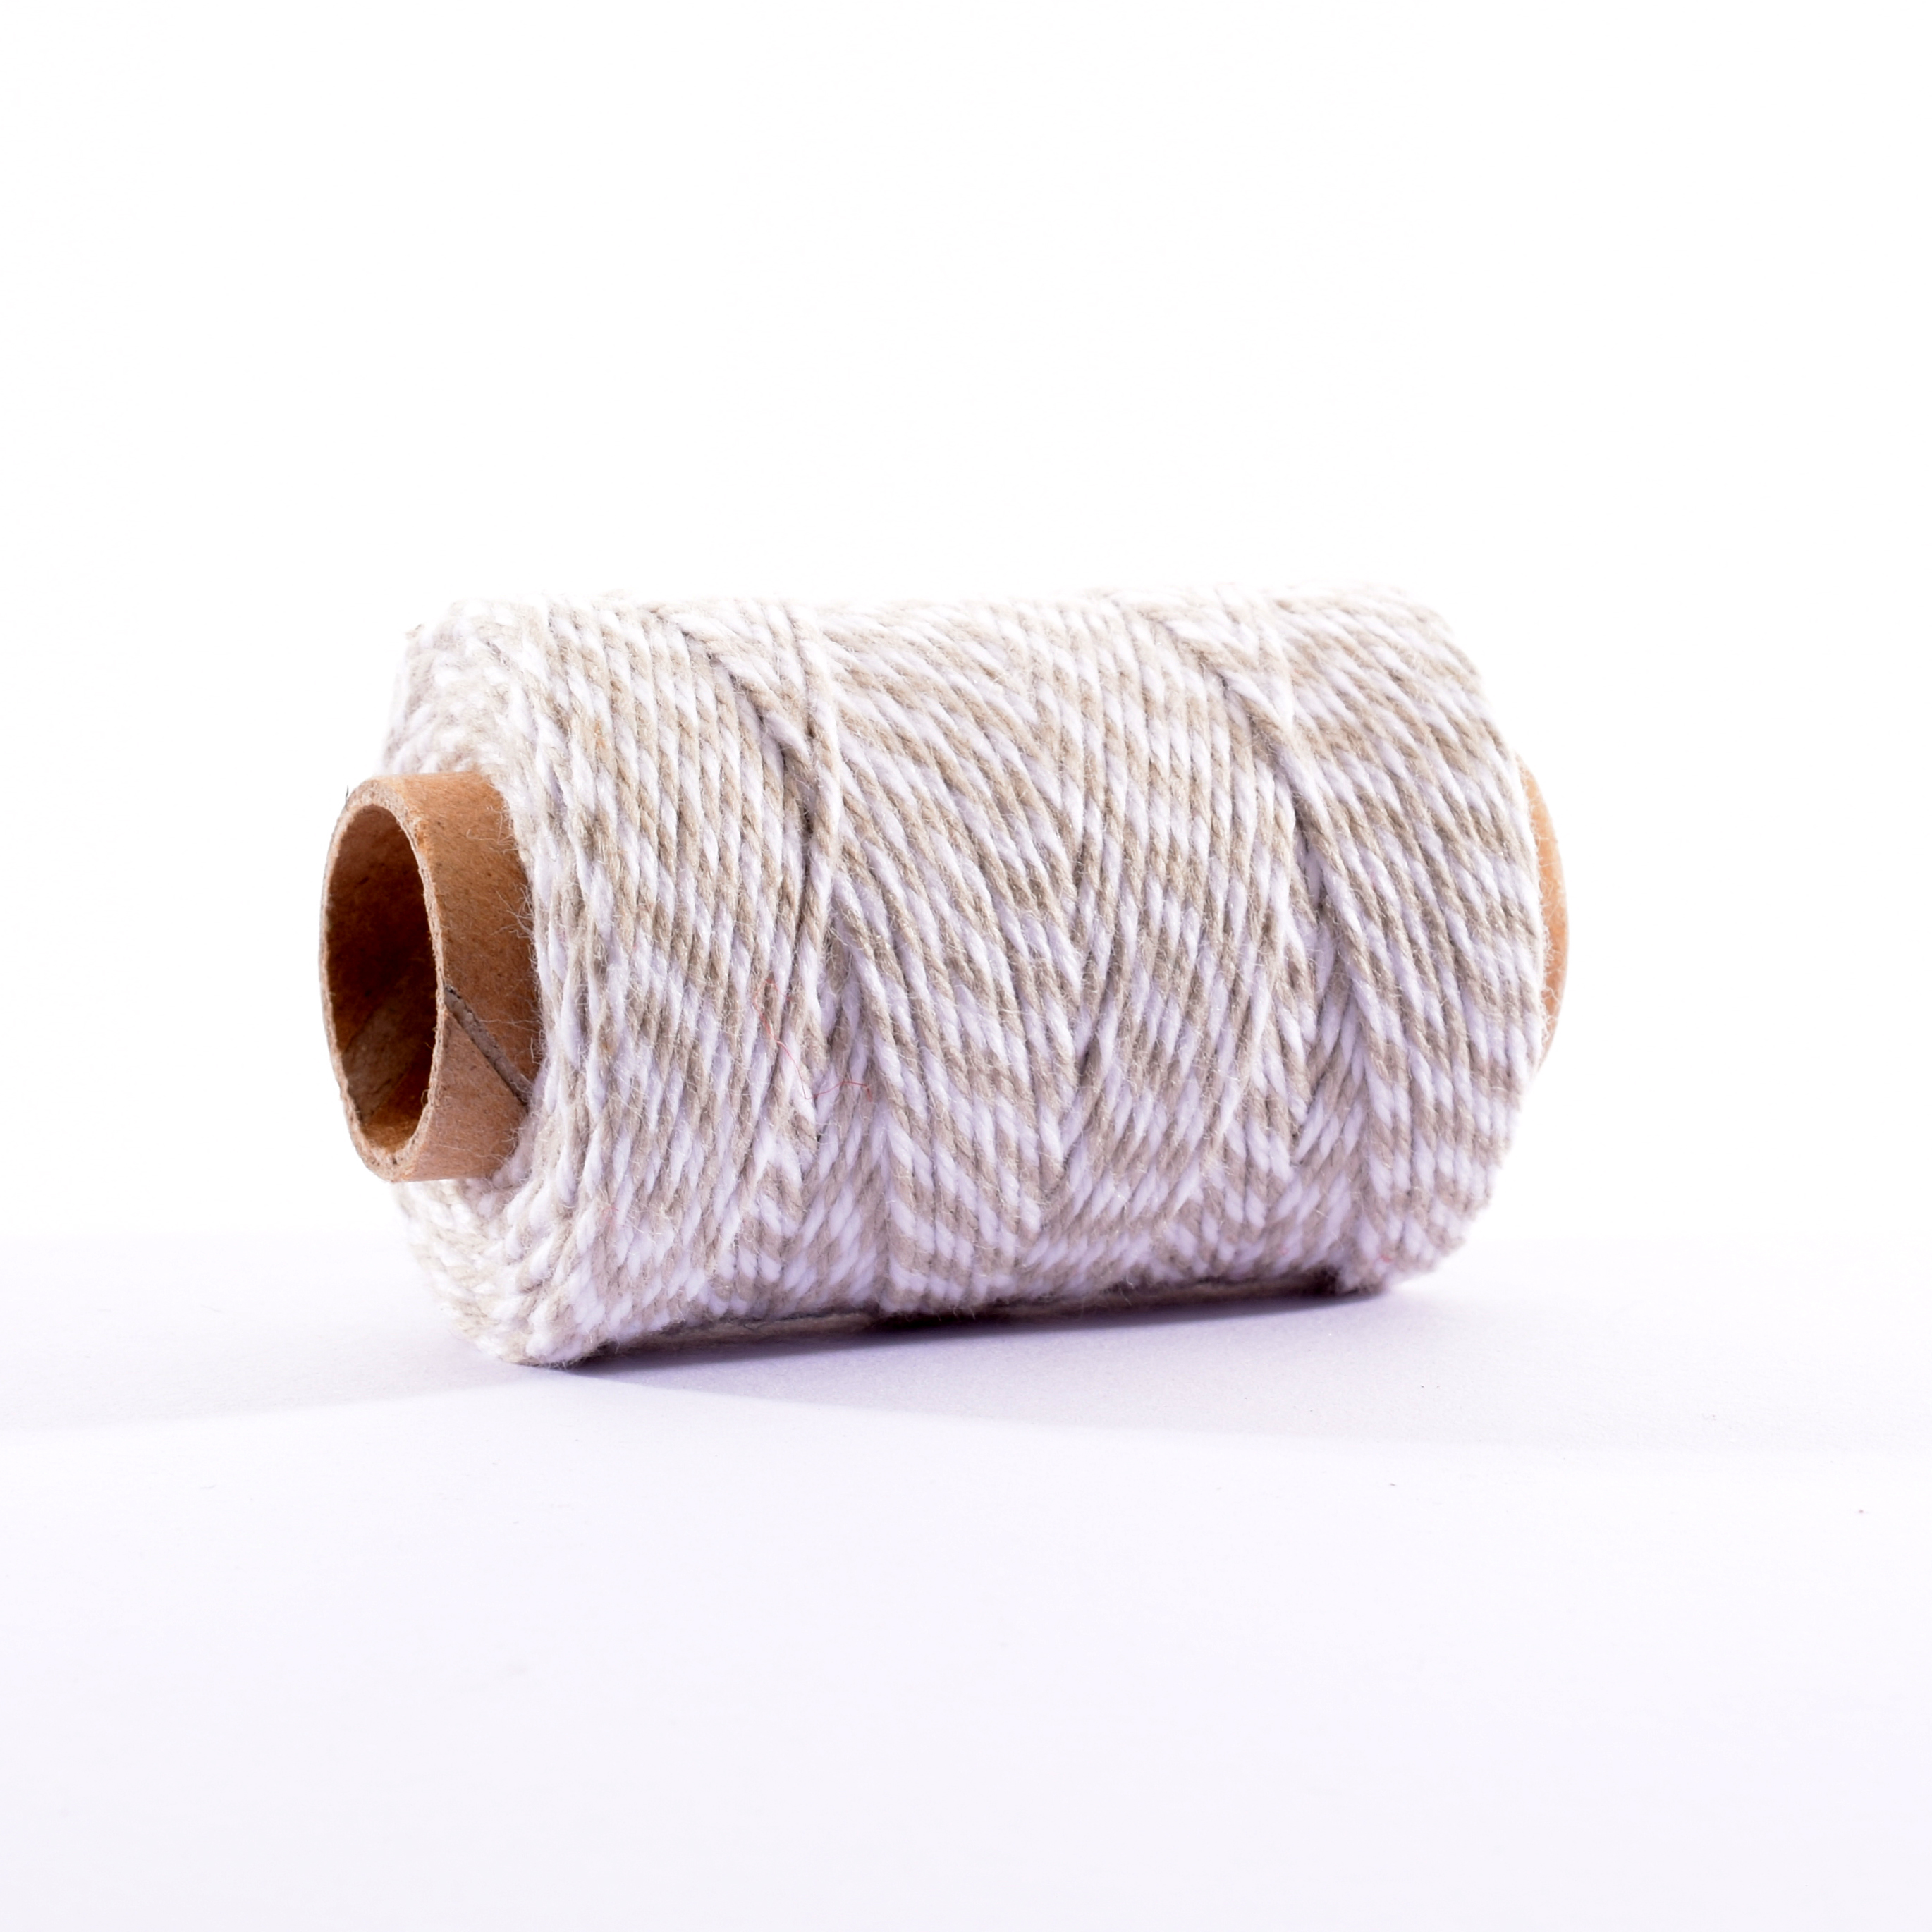 Vaessen Creative • Ficelle de Boulanger 45m Ecru-White 1mm corde